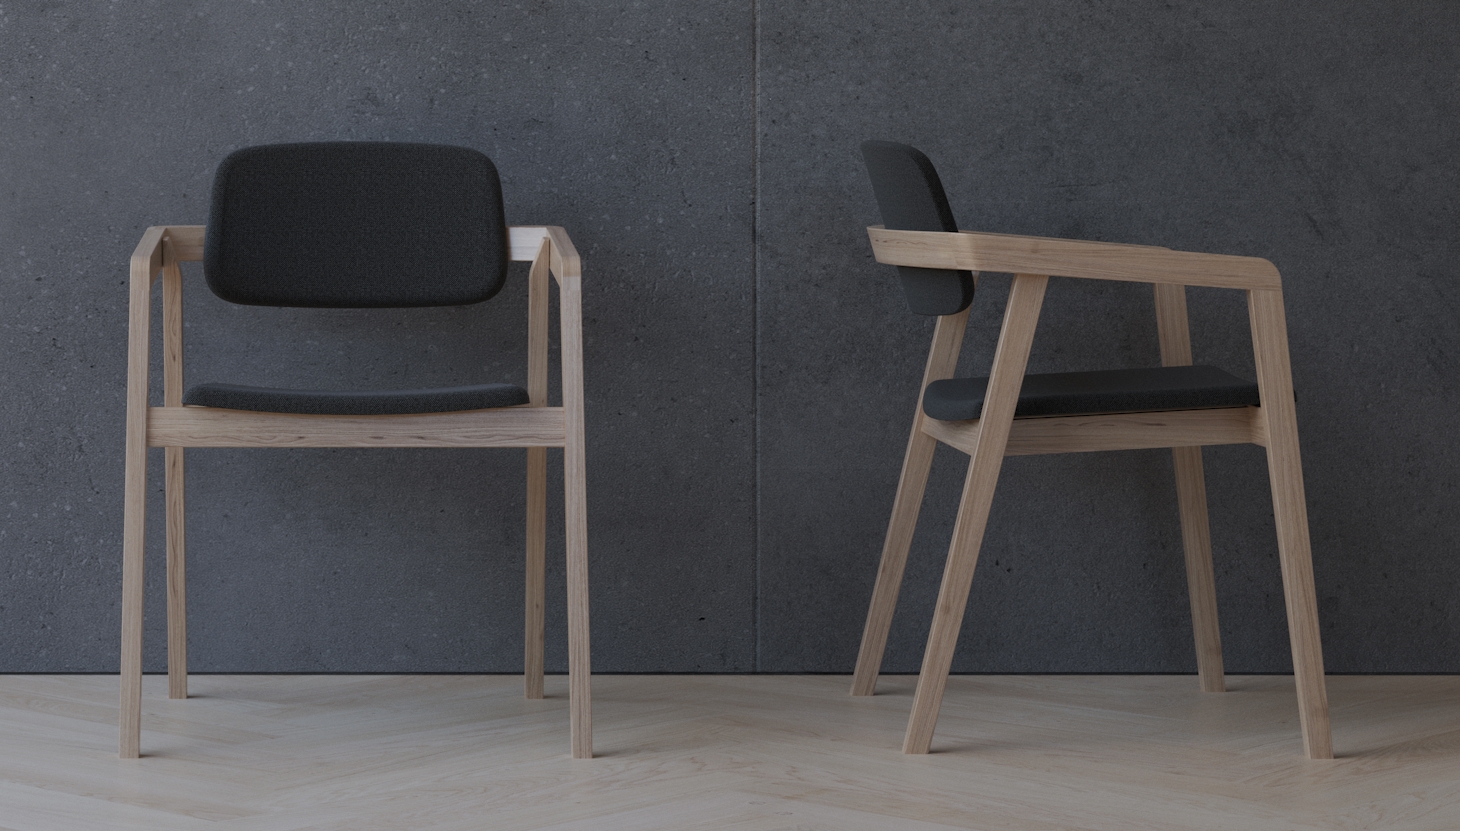 AYO - Ny stol designet specielt til plejesektoren